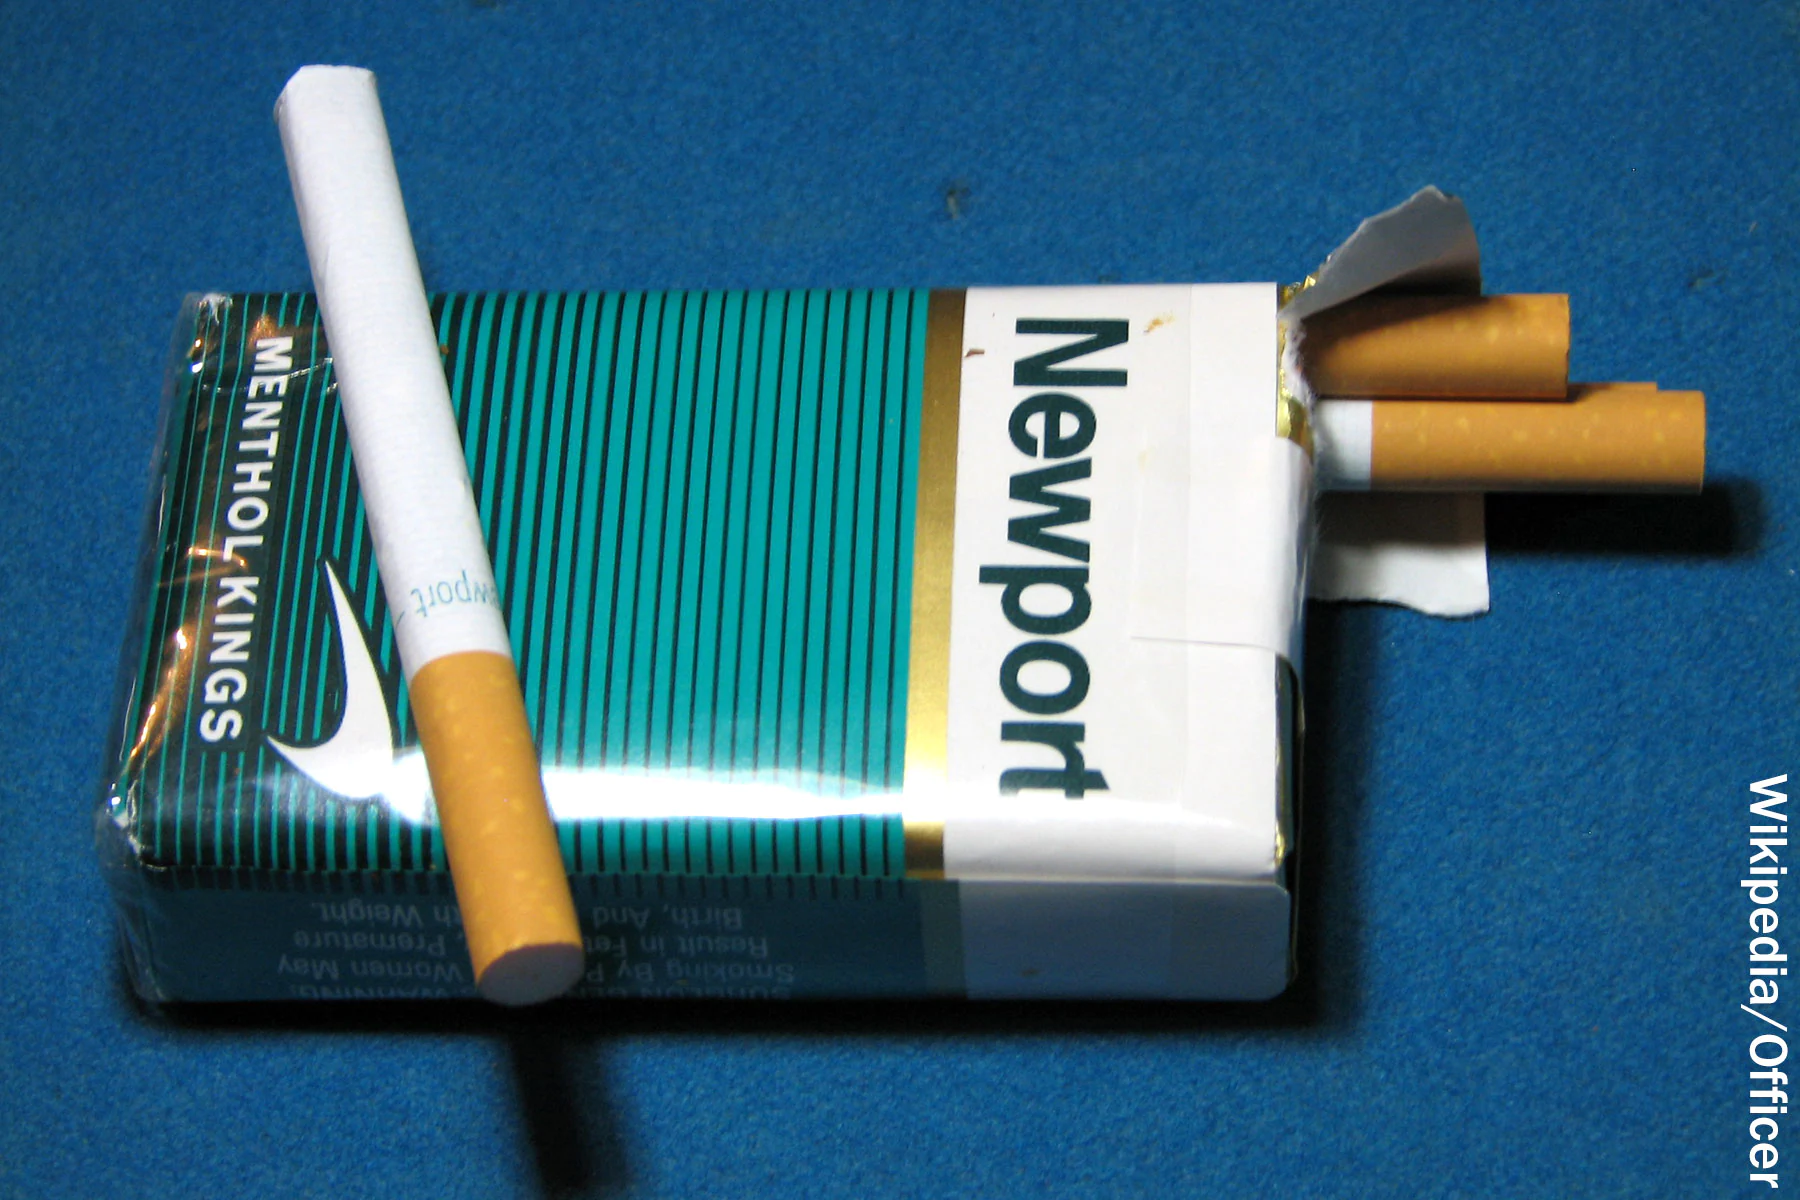 FDA Strikes to Ban Menthol in Cigarettes